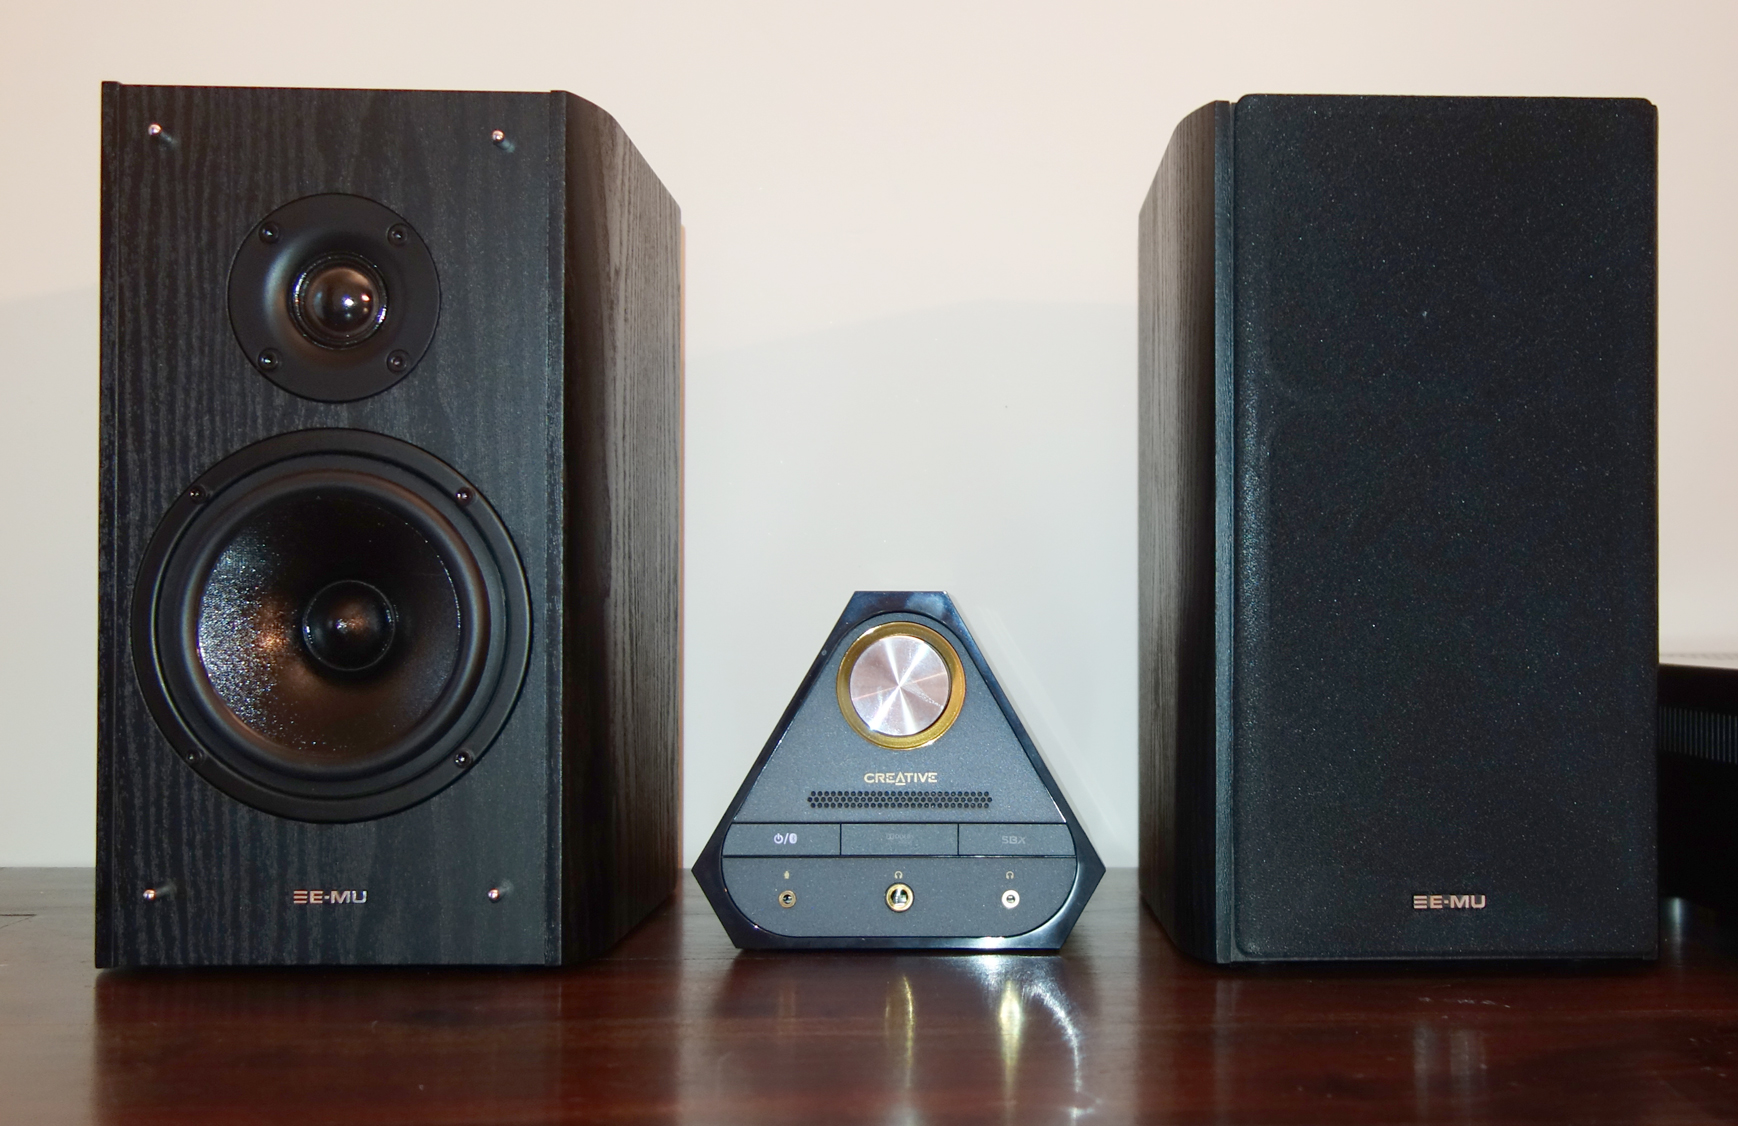 Creative Sound Blaster X7 with E-MU XM7 speakers